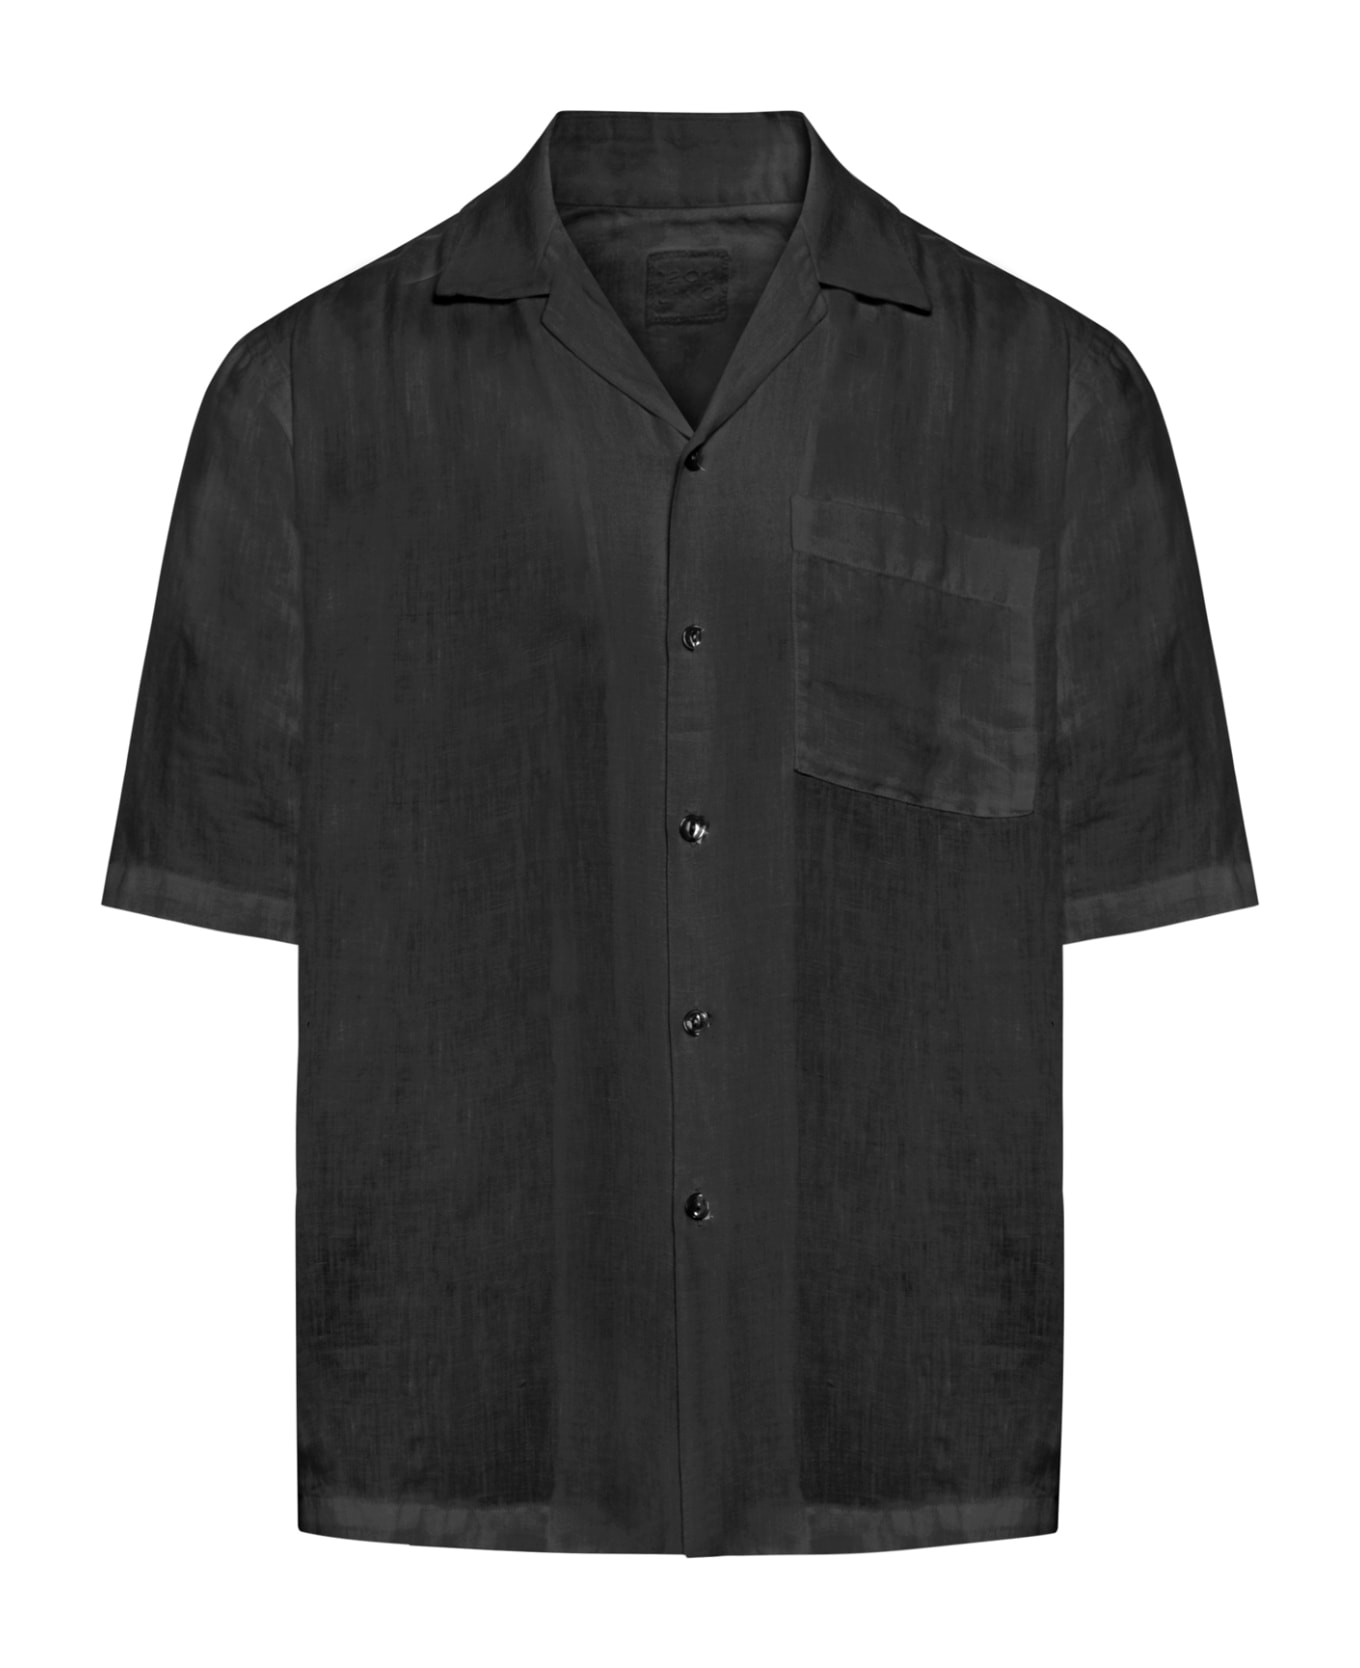 120% Lino Short Sleeve Men Shirt - Black